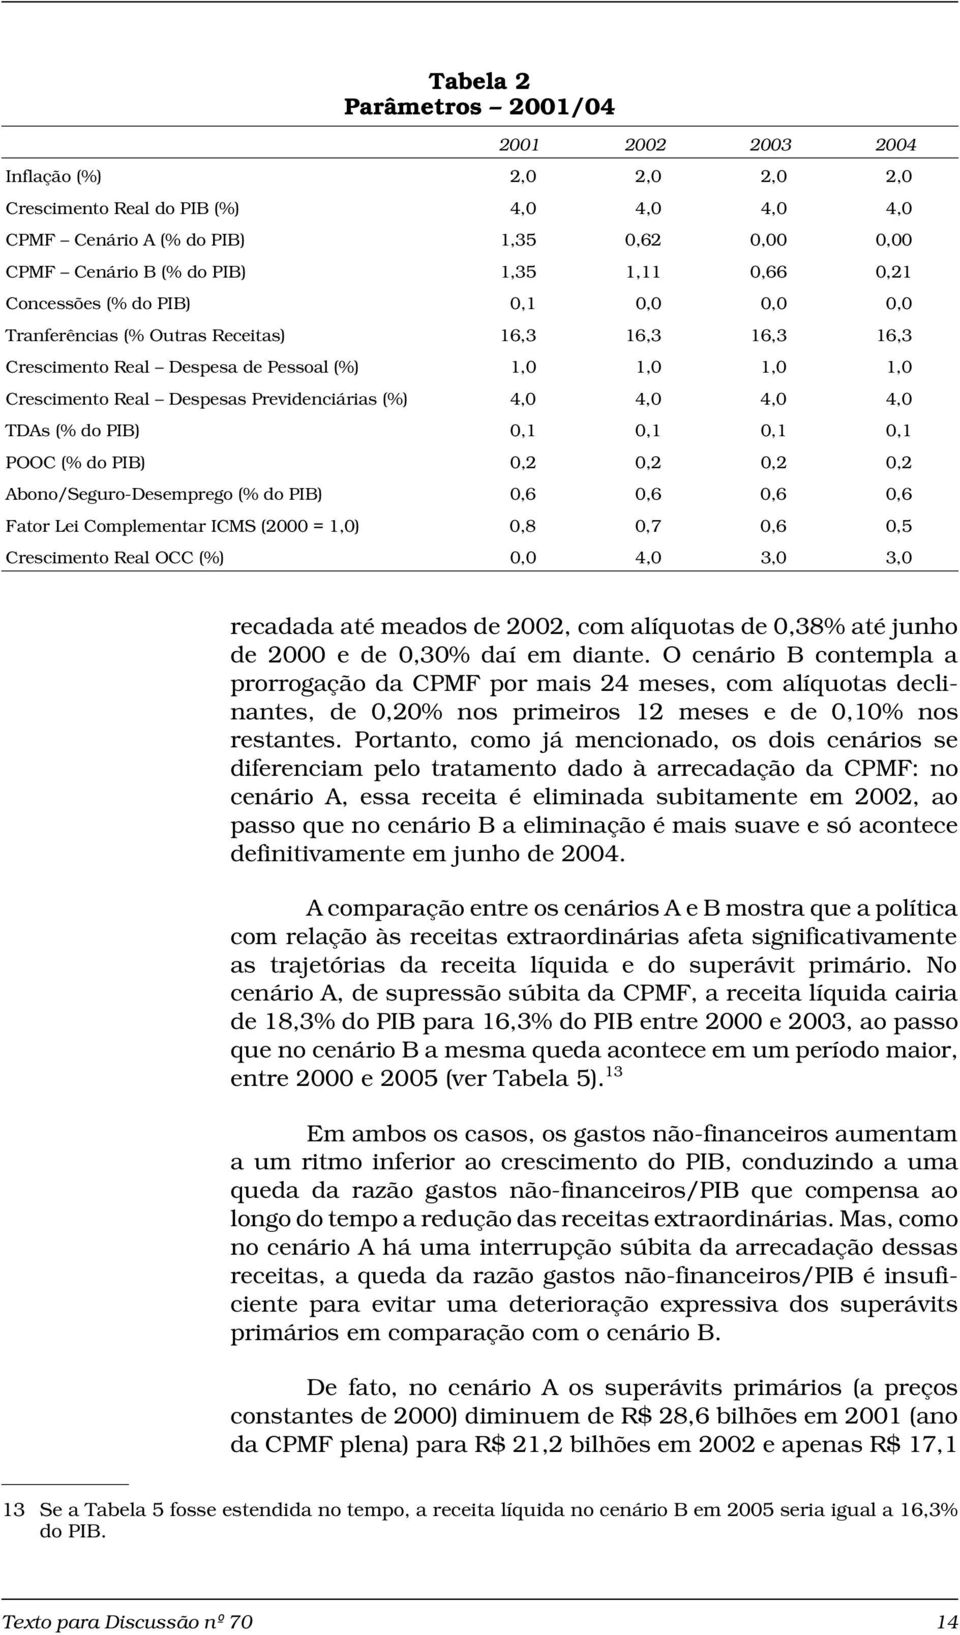 Previdenciárias (%) 4,0 4,0 4,0 4,0 TDAs (% do PIB) 0,1 0,1 0,1 0,1 POOC (% do PIB) 0,2 0,2 0,2 0,2 Abono/Seguro-Desemprego (% do PIB) 0,6 0,6 0,6 0,6 Fator Lei Complementar ICMS (2000 = 1,0) 0,8 0,7